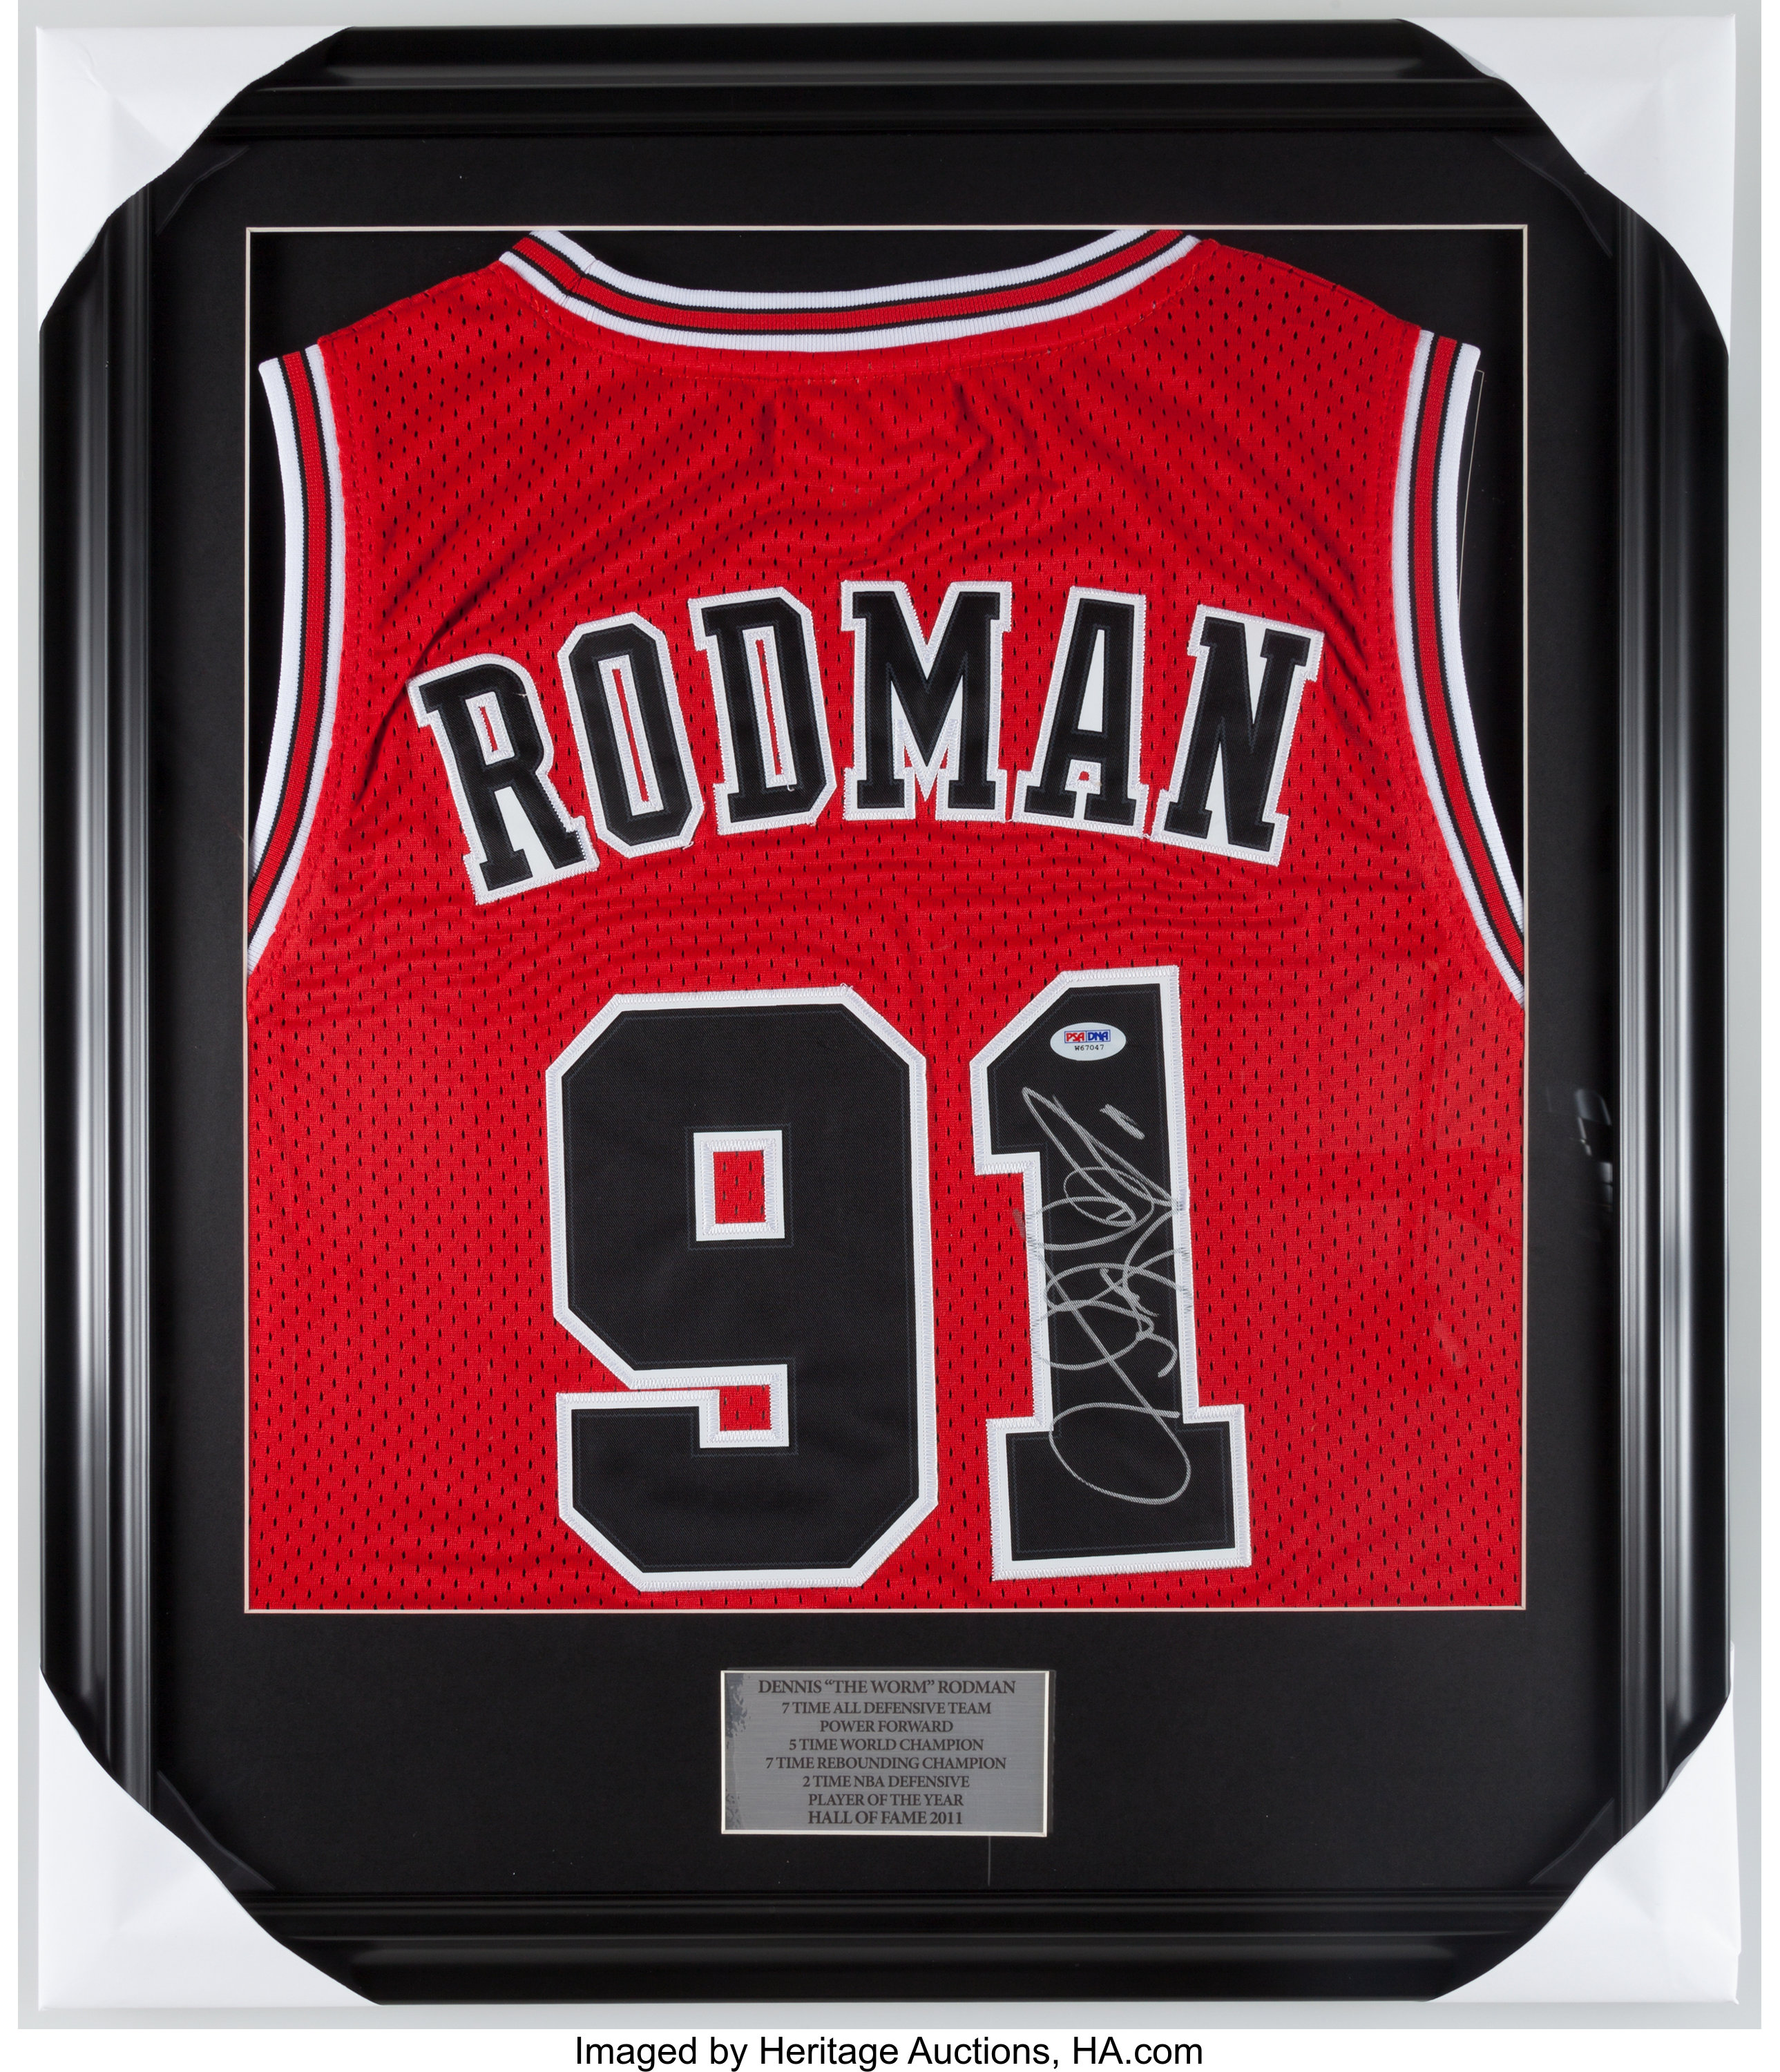 Dennis Rodman Signed Jersey. Basketball Collectibles Uniforms